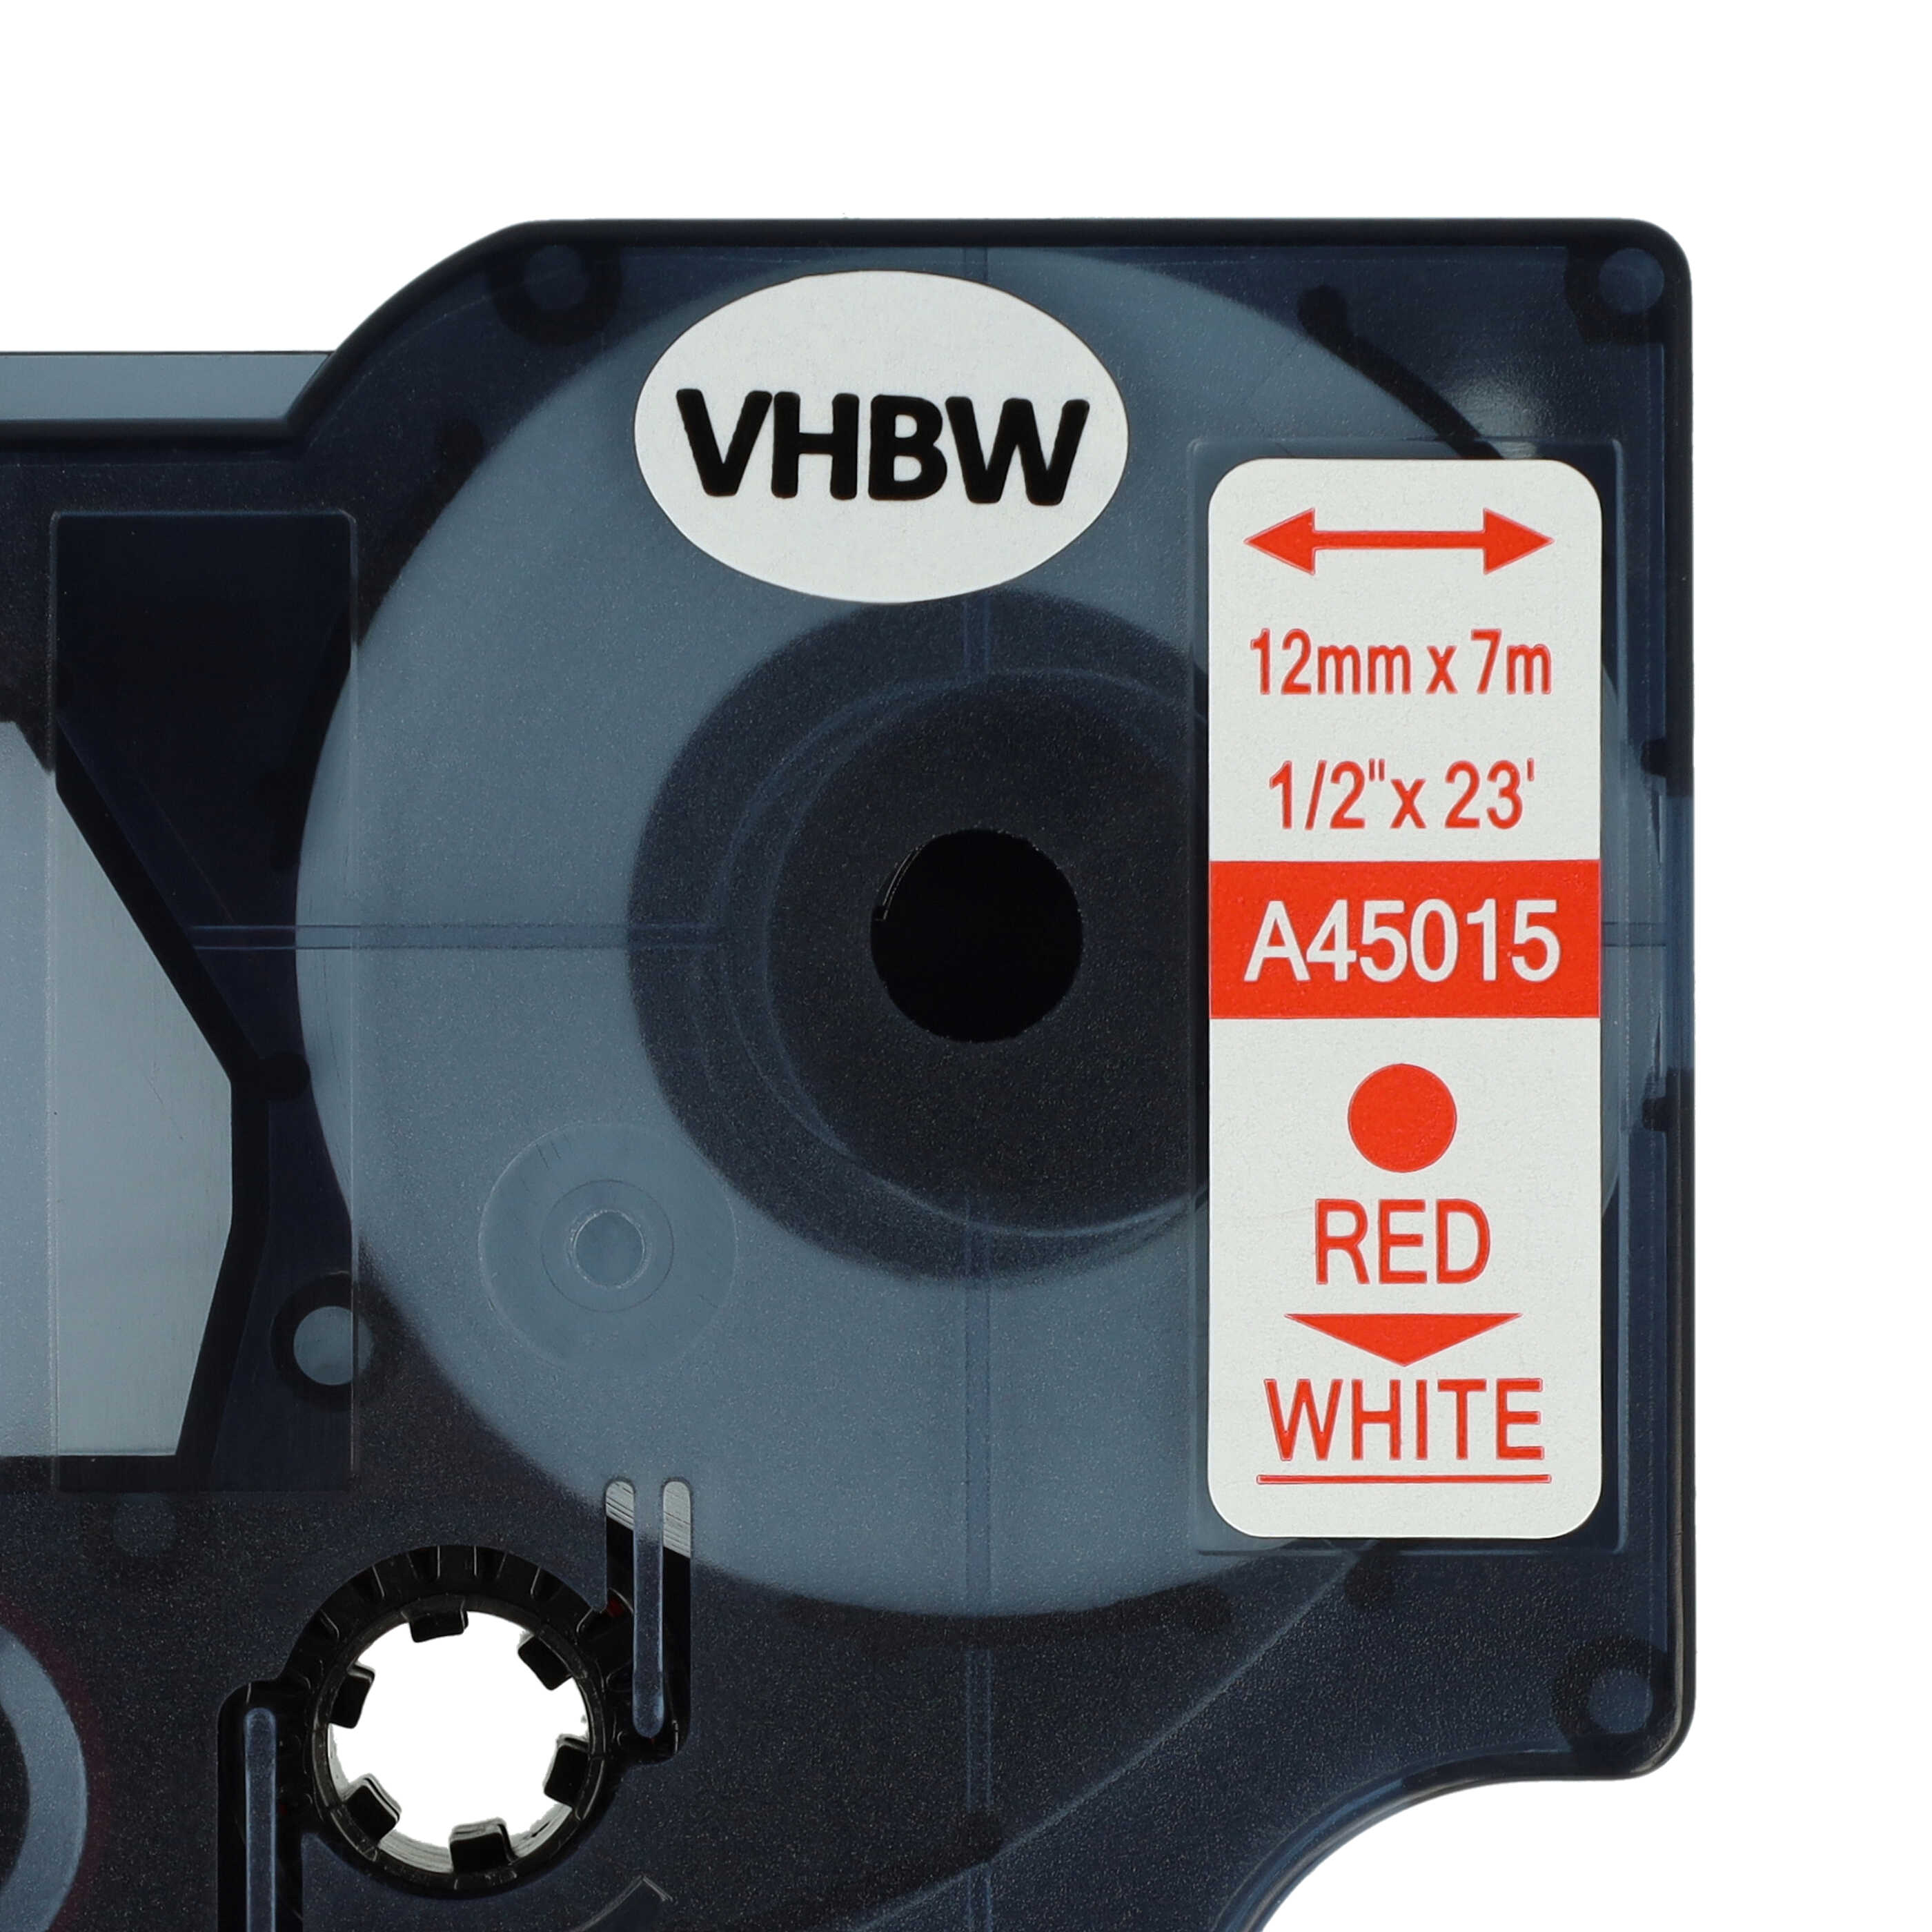 Casete cinta escritura reemplaza Dymo 45015, D1 Rojo su Blanco